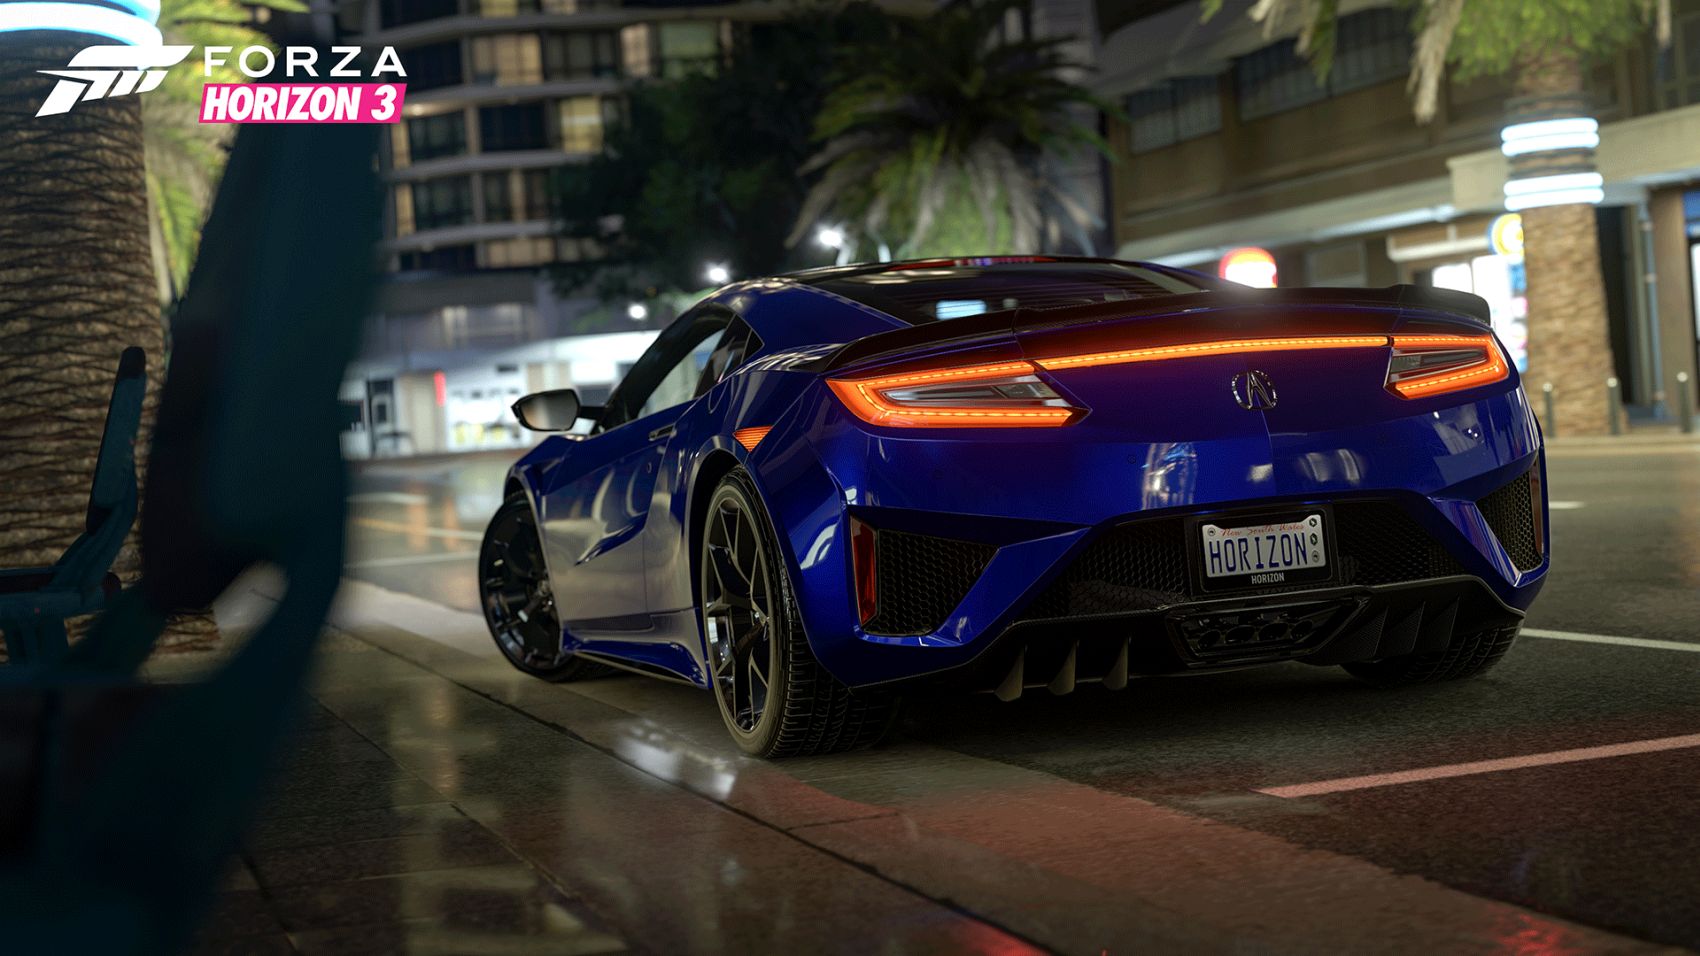 Image for Forza Horizon 3 Windows 10 demo finally released